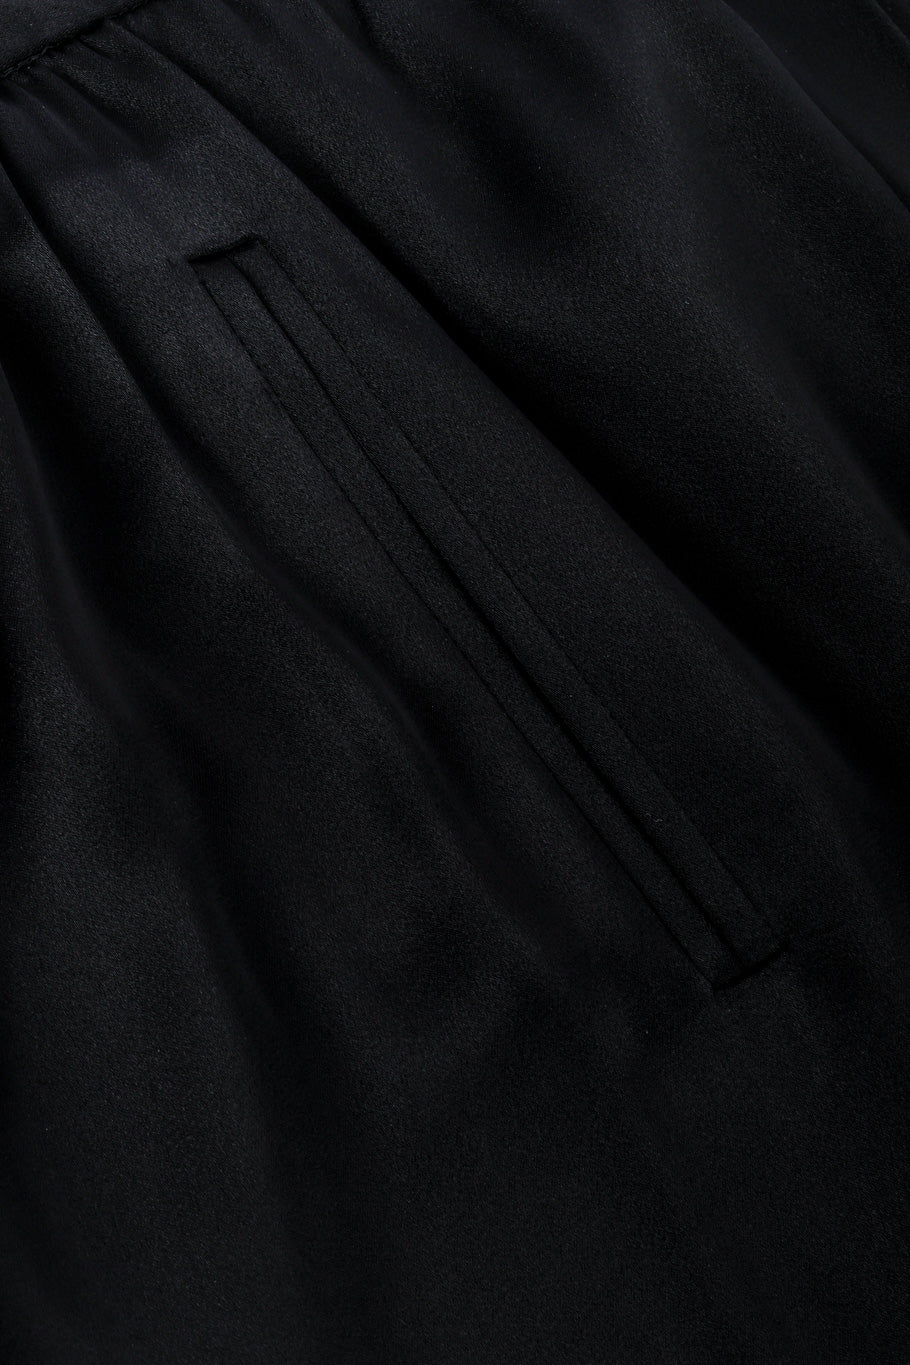 Vintage Yves Saint Laurent Wrap Midi Skirt welt pocket closeup @recessla